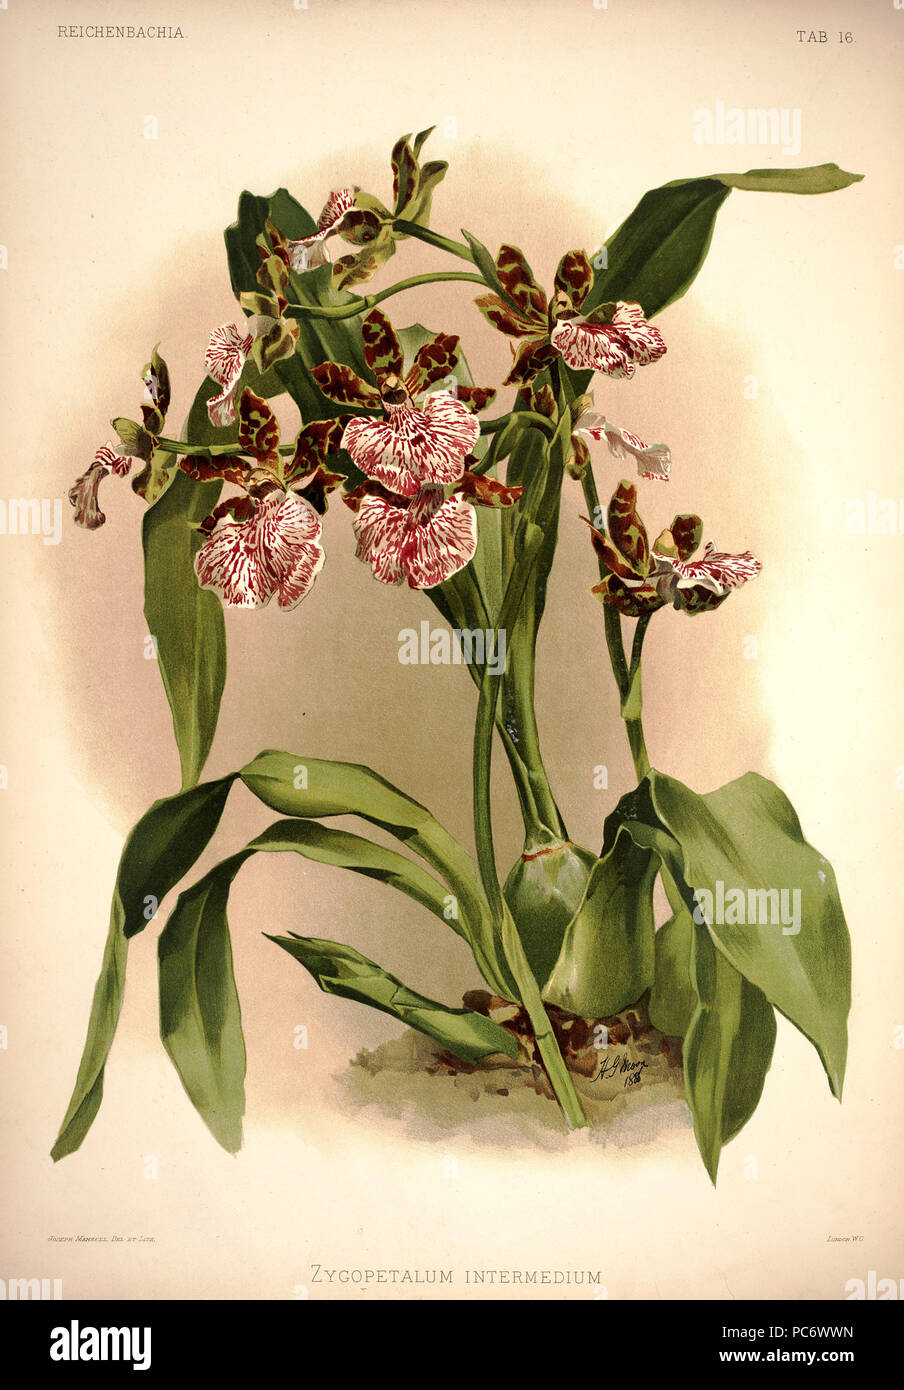 220 Frederick Sander - Reichenbachia I plate 16 (1888) - Zygopetalum intermedium Stock Photo